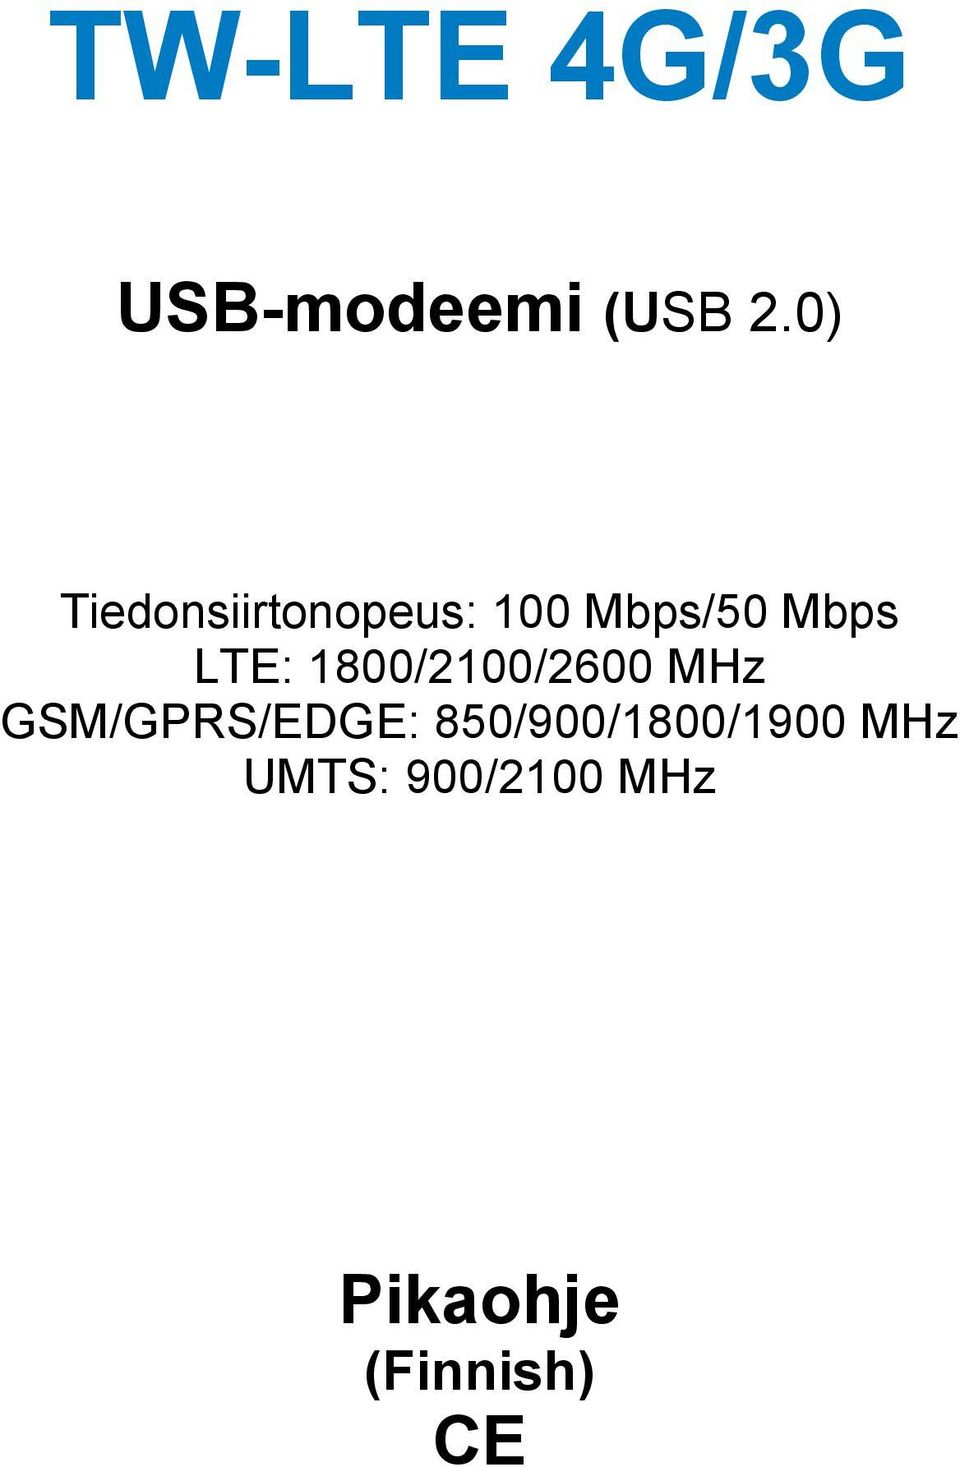 LTE: 1800/2100/2600 MHz GSM/GPRS/EDGE: